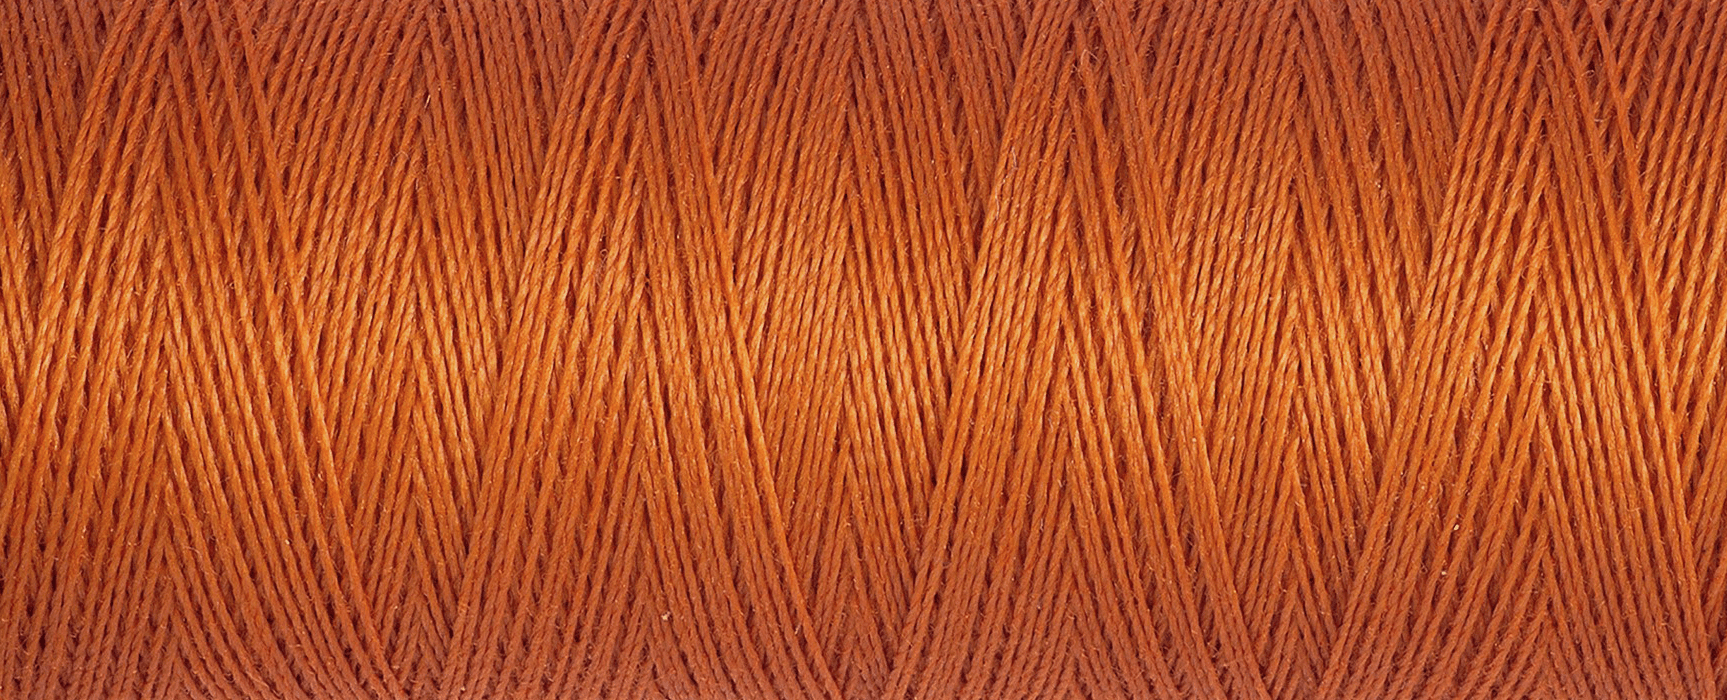 Gutermann Sew-All Thread - 100M (982)-Thread-Jelly Fabrics